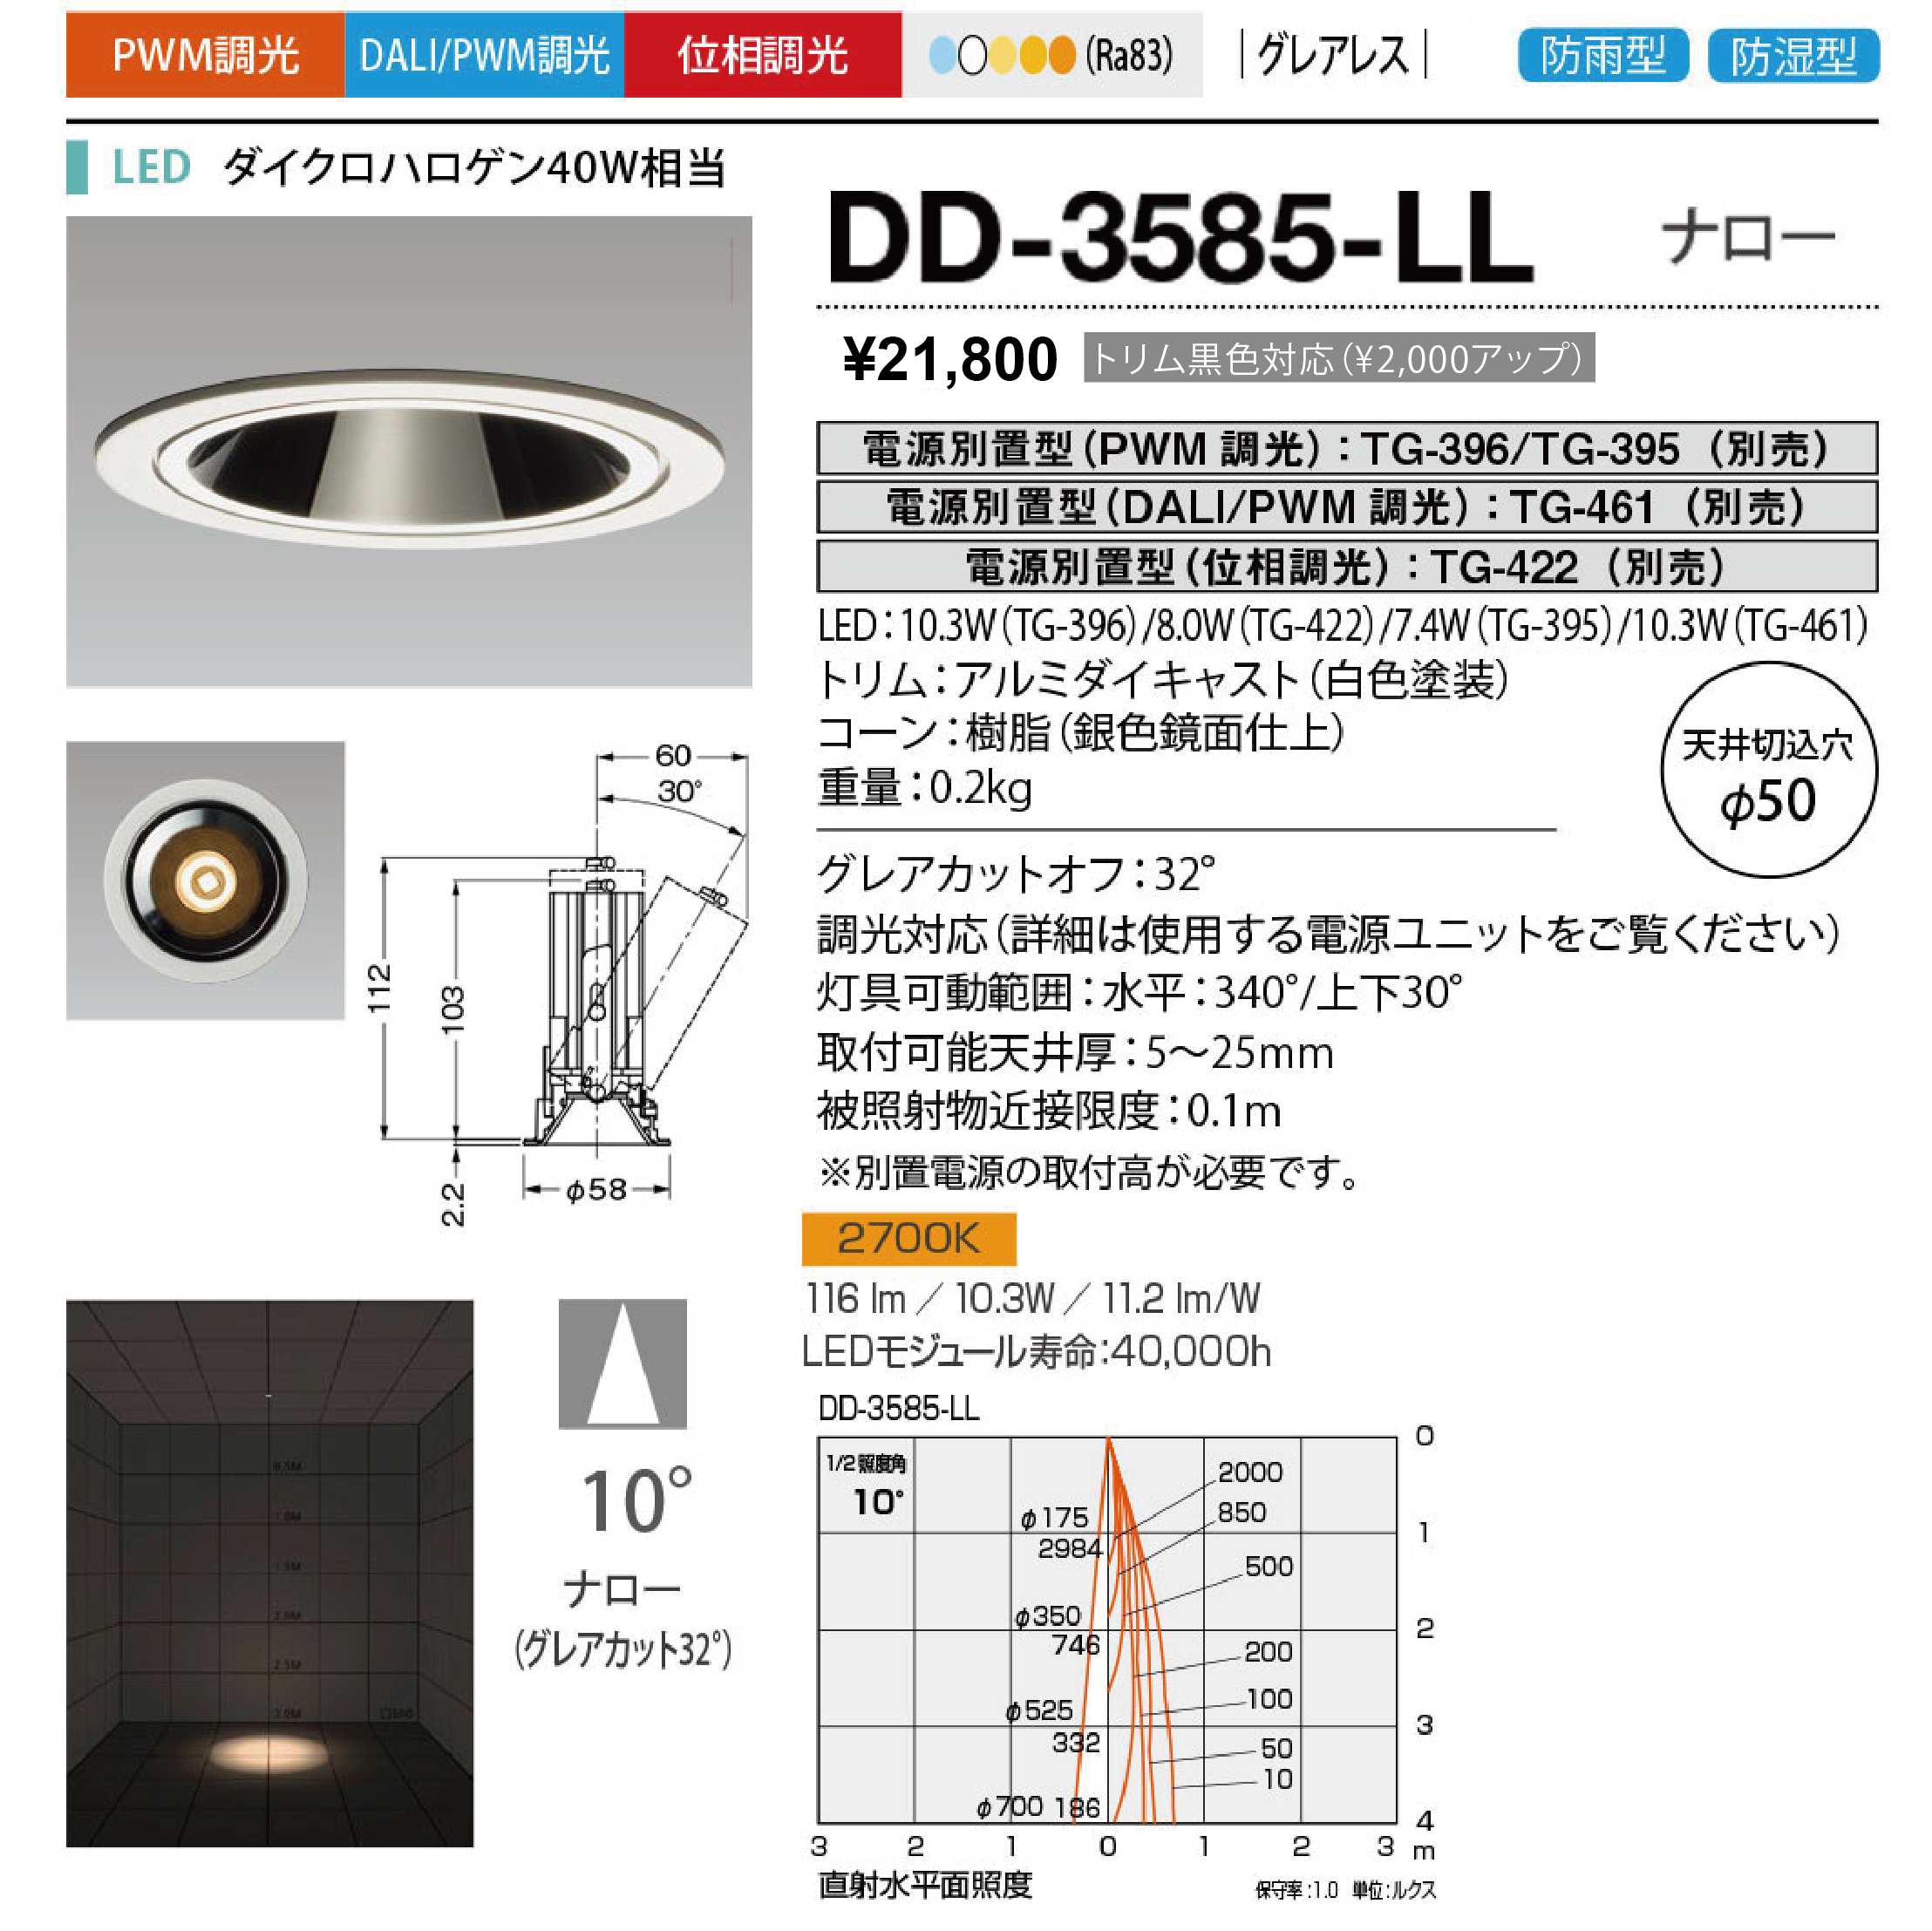 DD-3585-LL | 照明器具 | LED一体型 軒下用ダウンライト Unicorn NEO